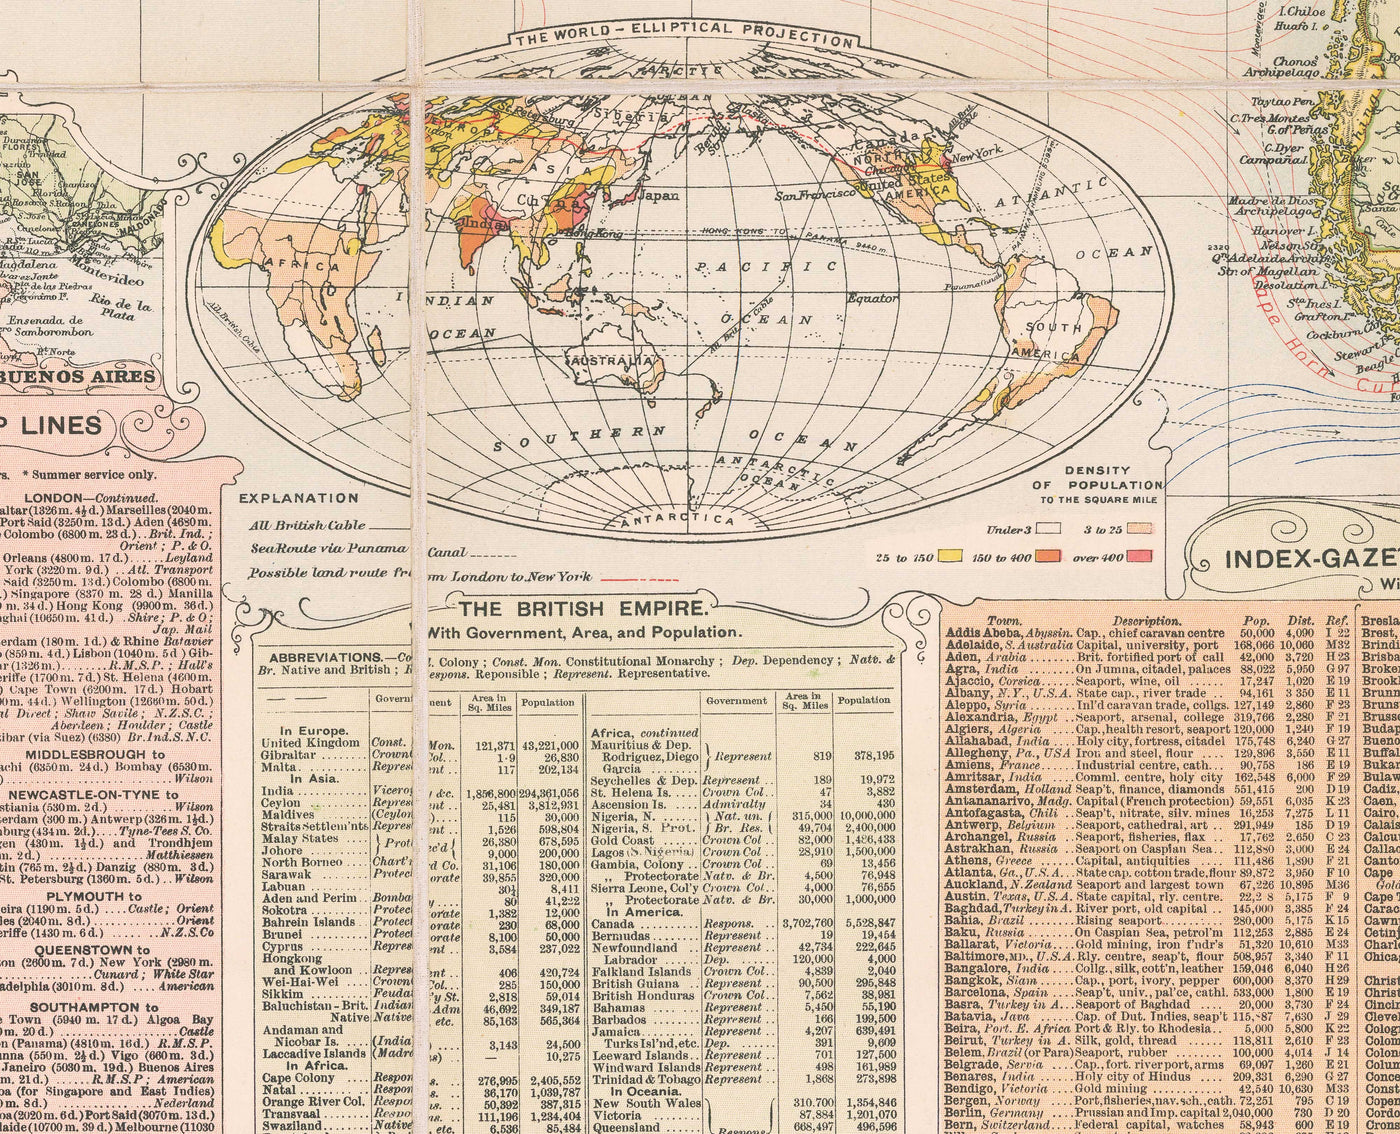 Old World Map by Bacon, 1908 - Large Rare Atlas - Shipping Lanes, Merchant Navy, Railways, British Empire